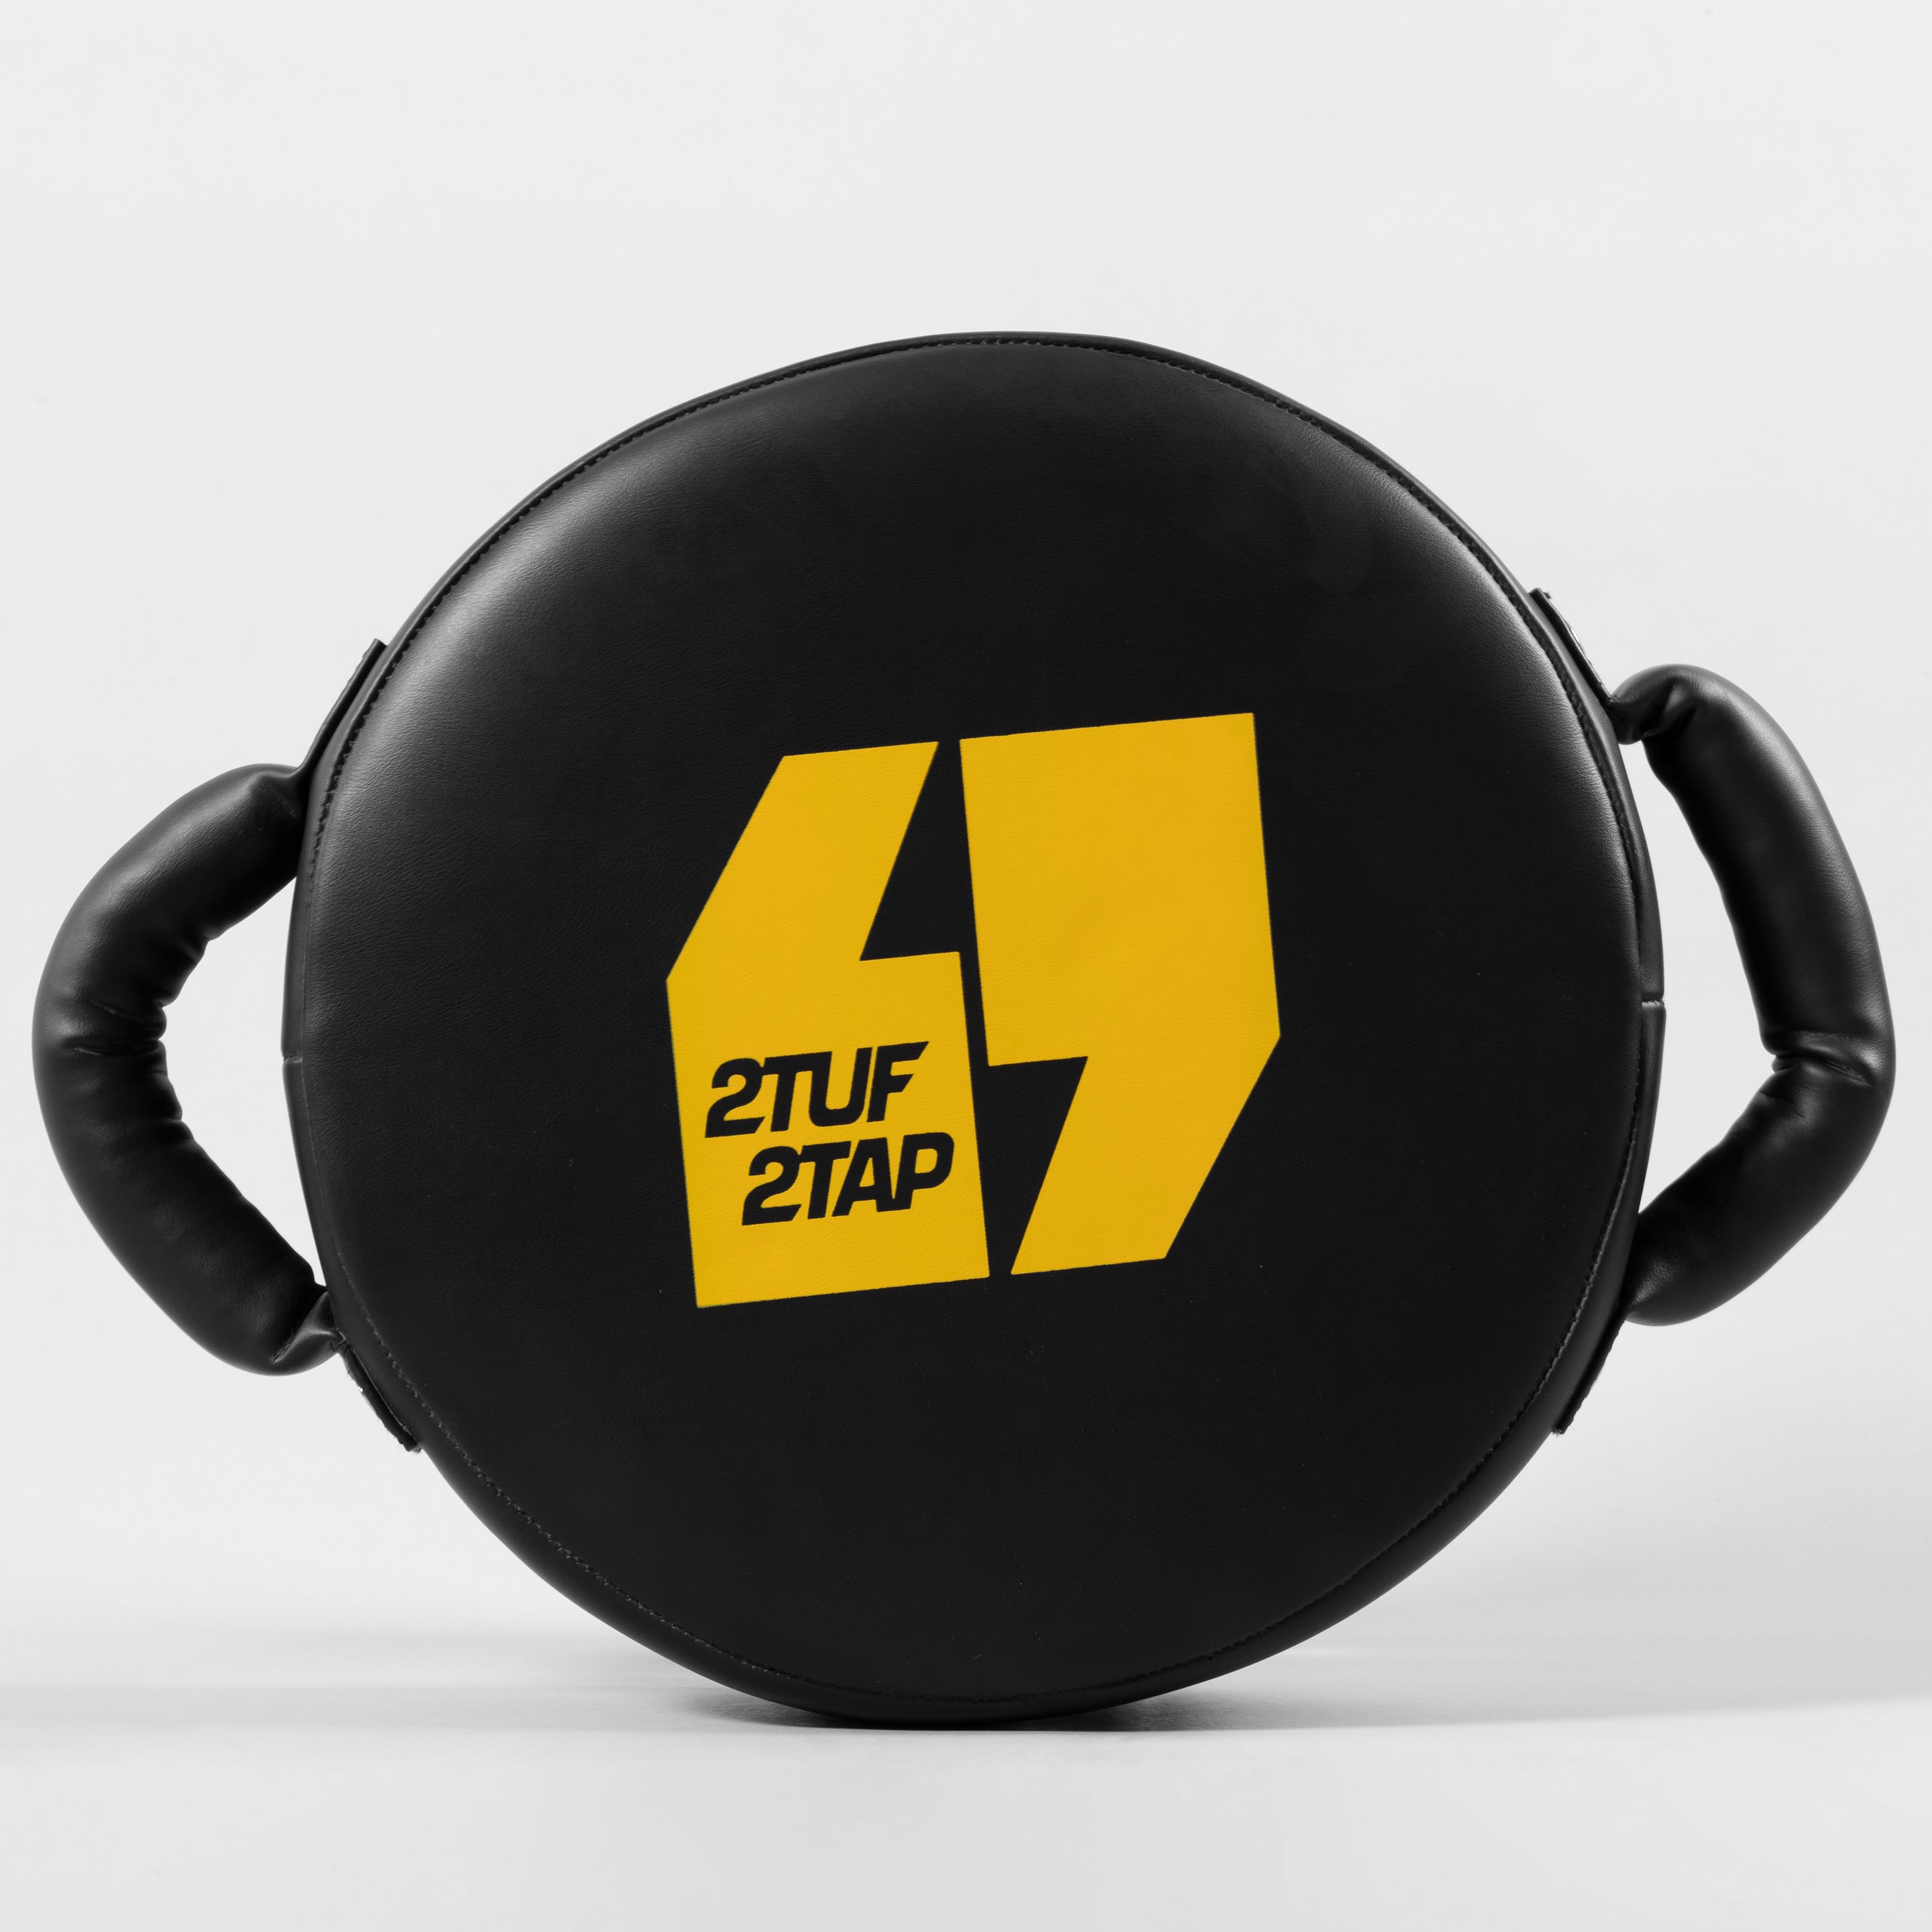 'Slash' Boxing Pad - Round - Black/Yellow 2TUF2TAP